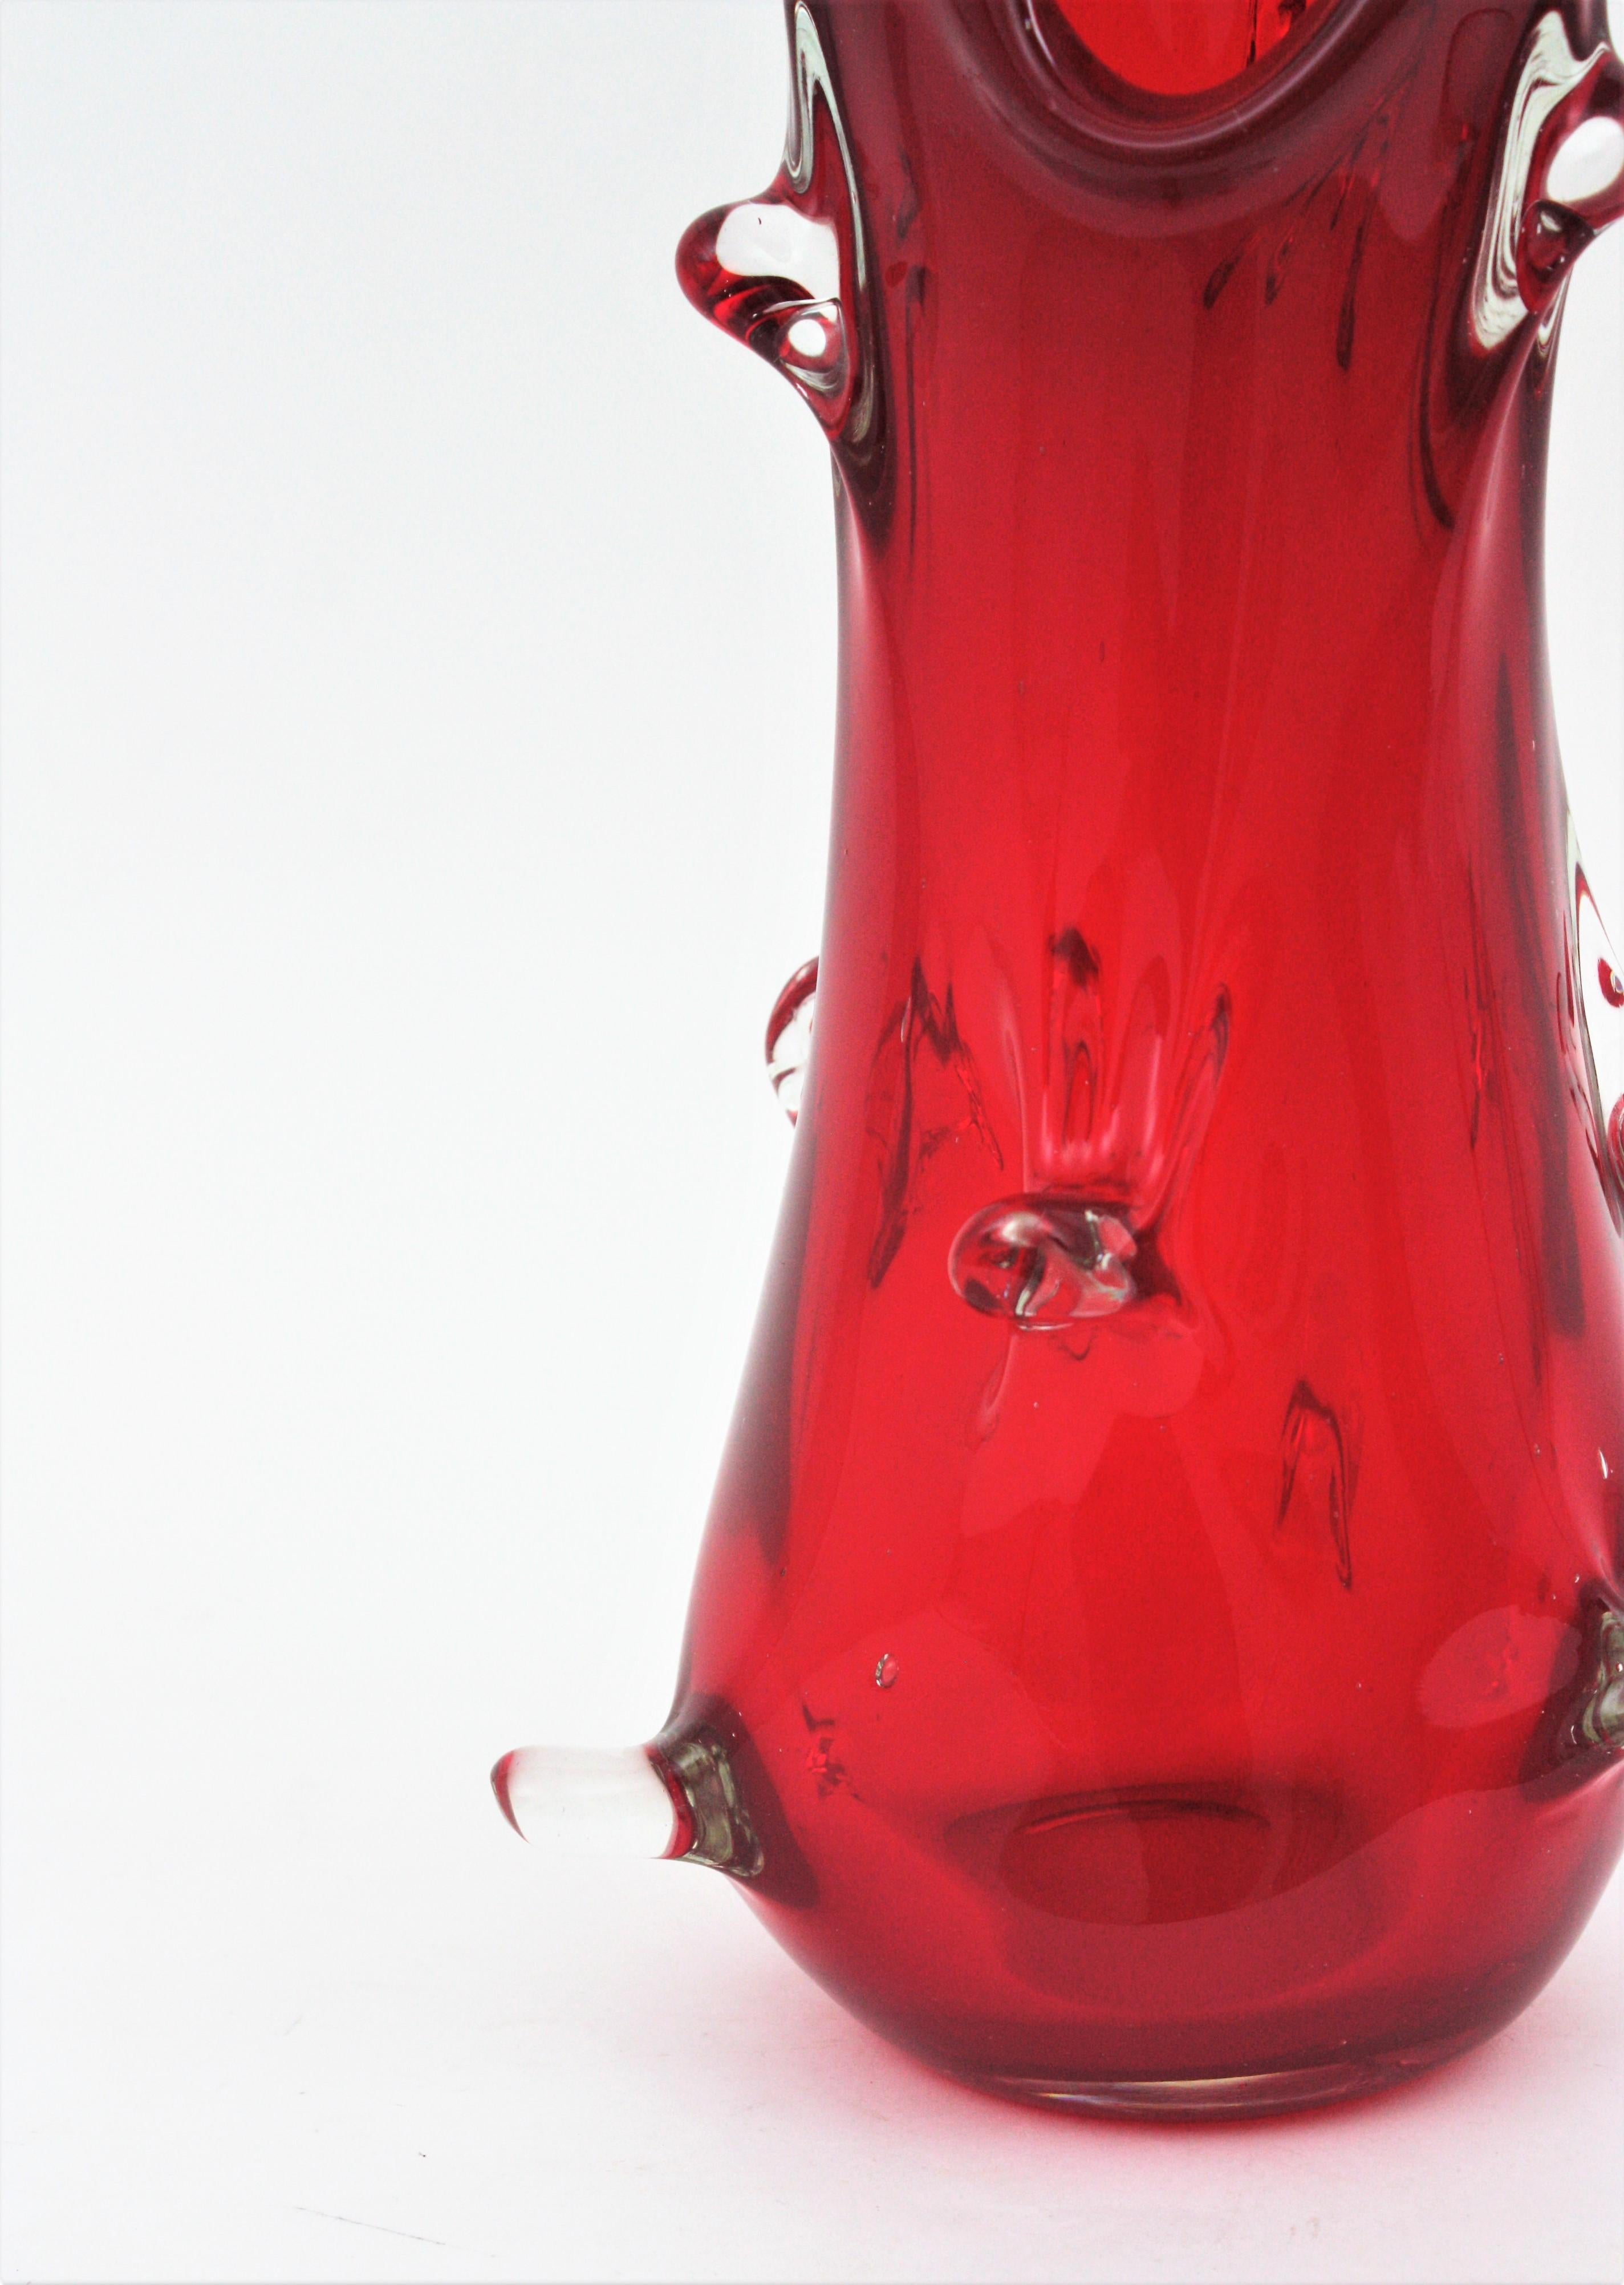 Archimede Seguso Murano Sommerso Red Iridiscent Art Glass Vase, 1960s For Sale 3